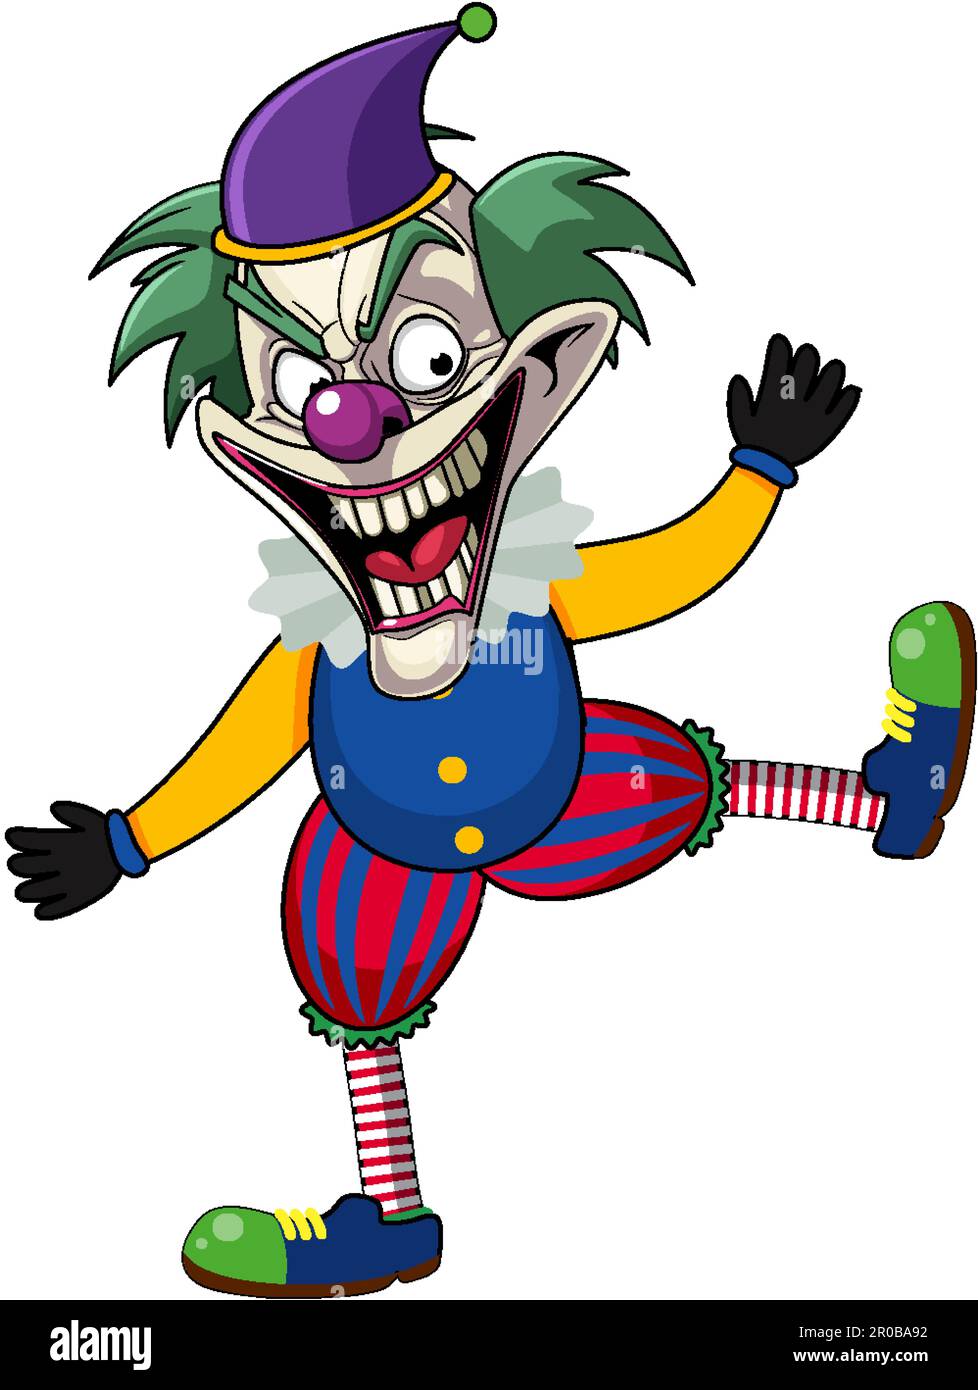 Creepy joker cartoon character illustration Stock Vector